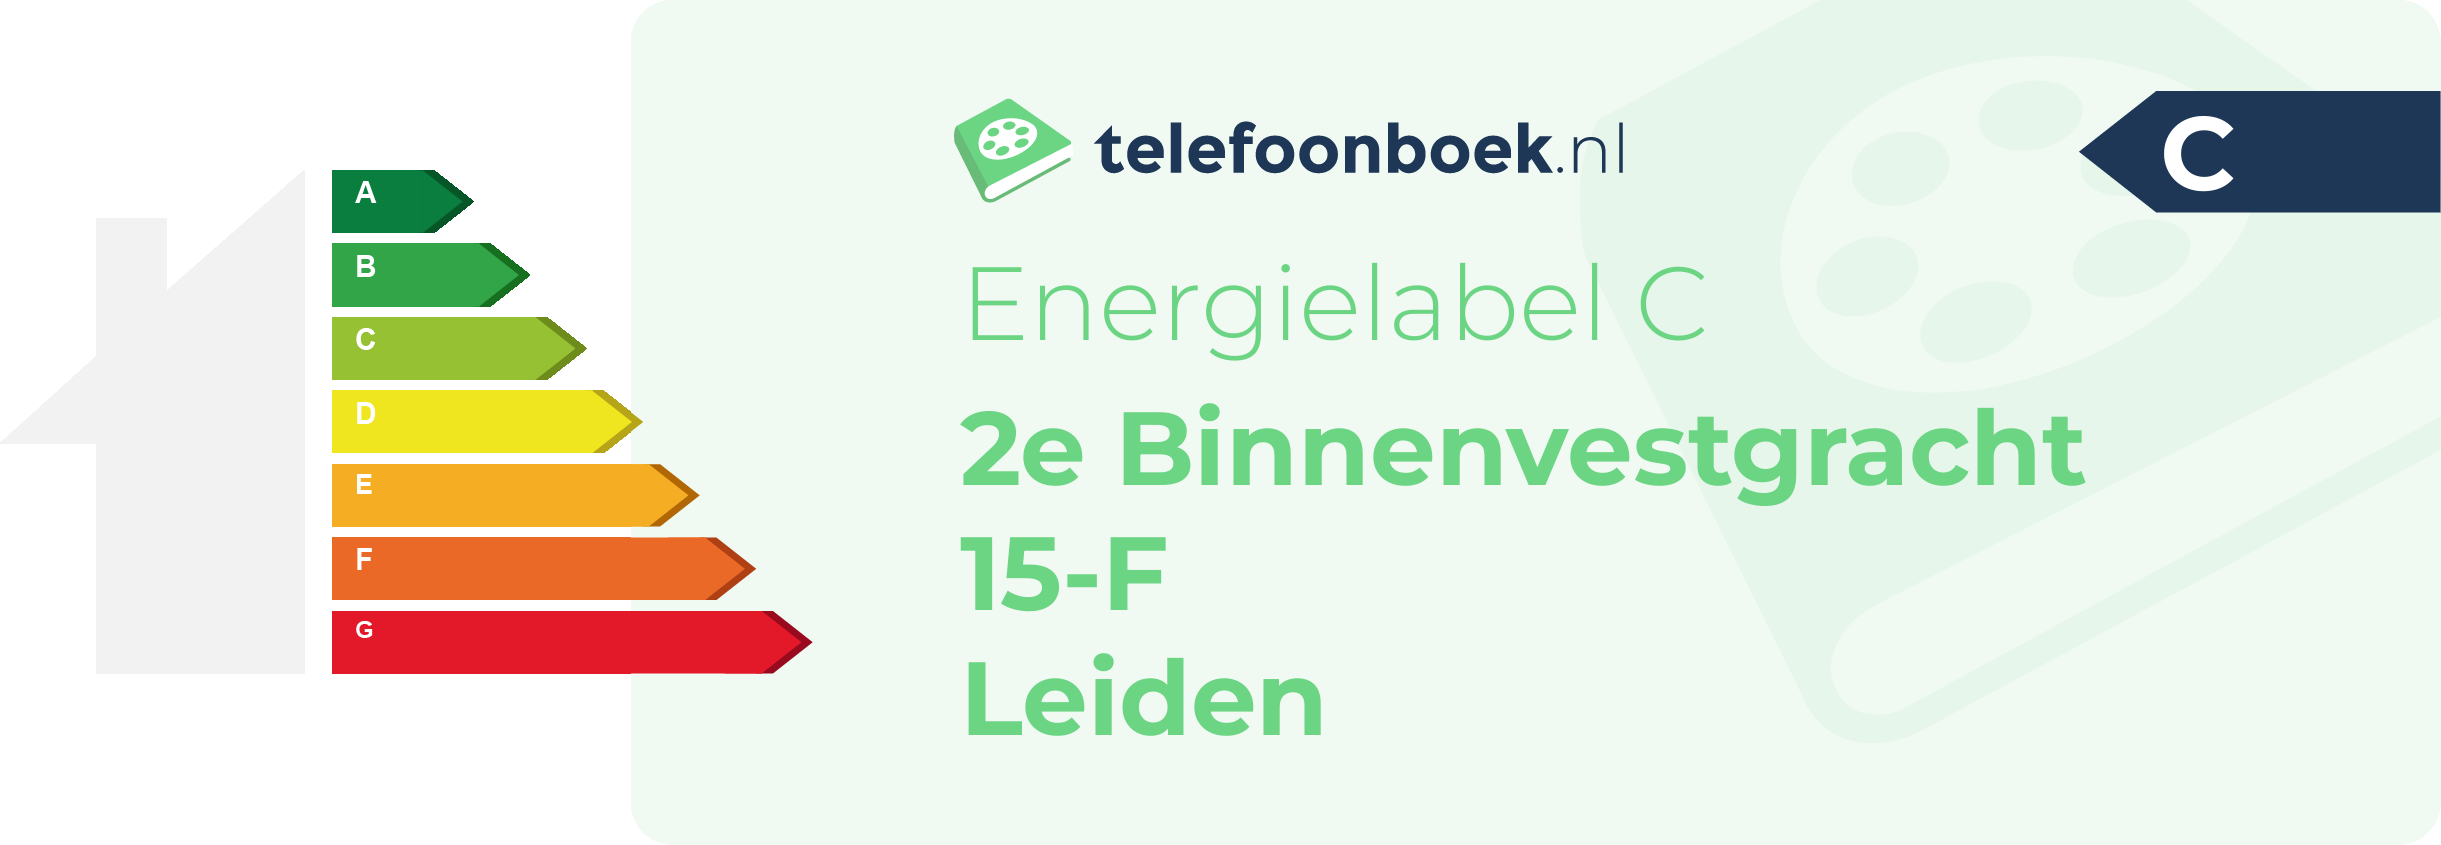 Energielabel 2e Binnenvestgracht 15-F Leiden